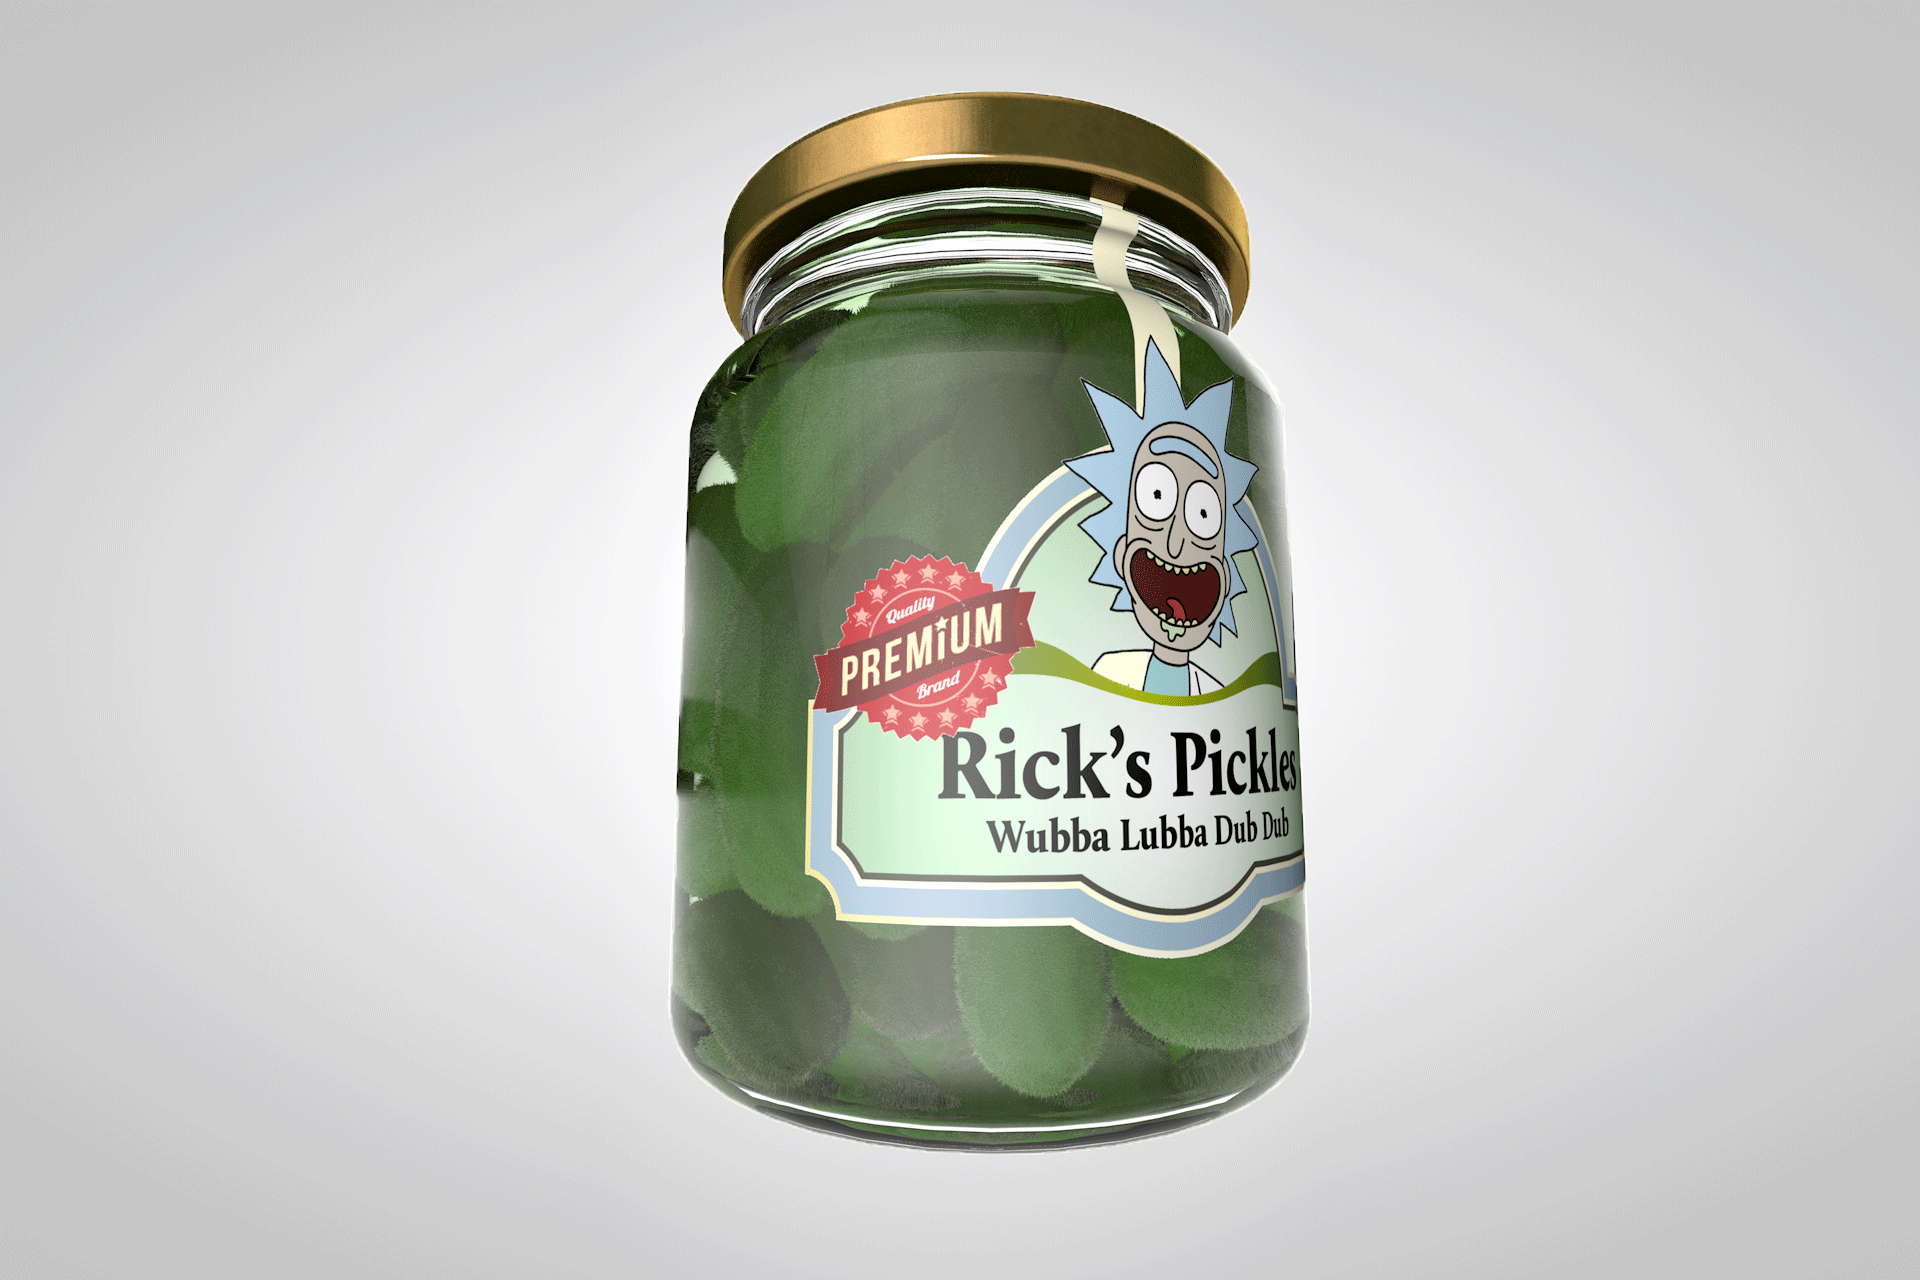 Rick and Morty fan art